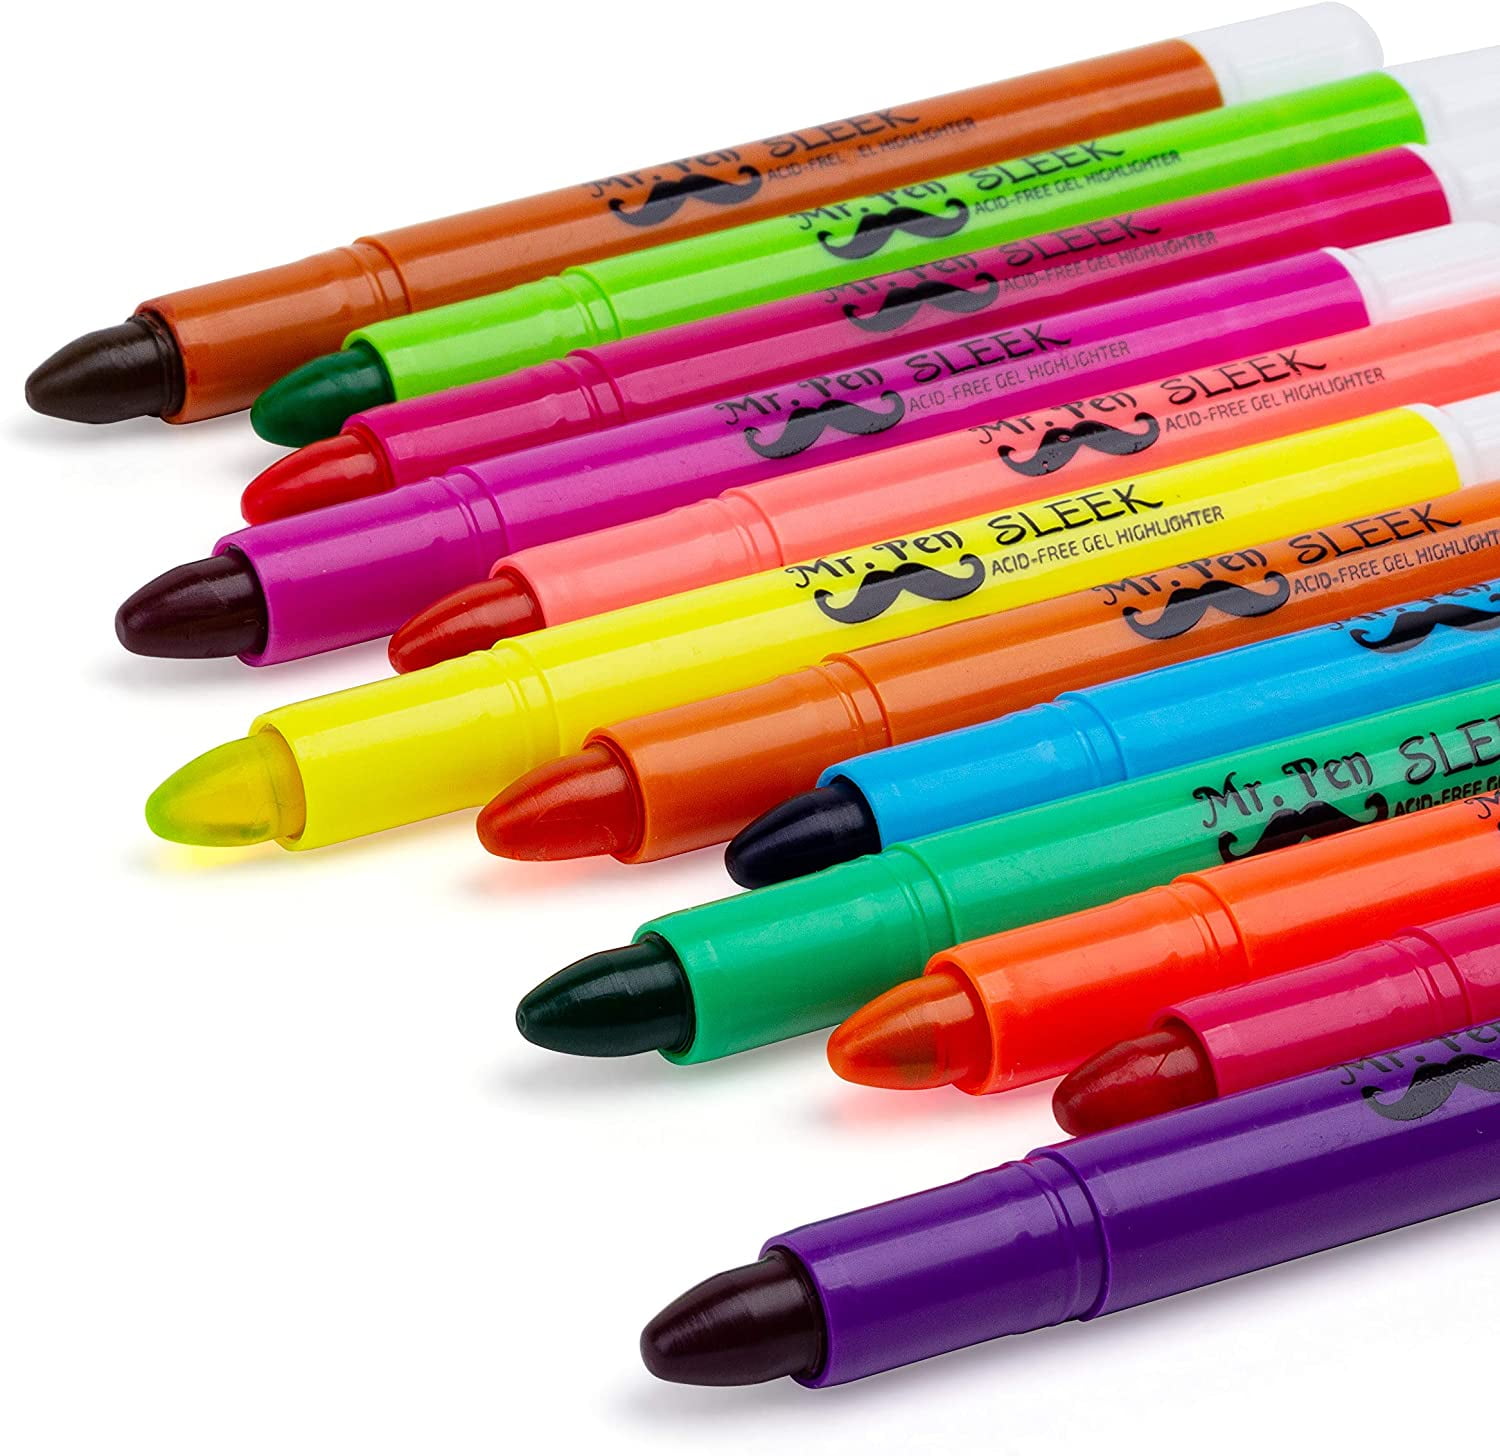 Mr. Pen BG20 Mr Pen No Bleed gel Highlighter, Bible Highlighters, Assorted  colors, Pack of 20